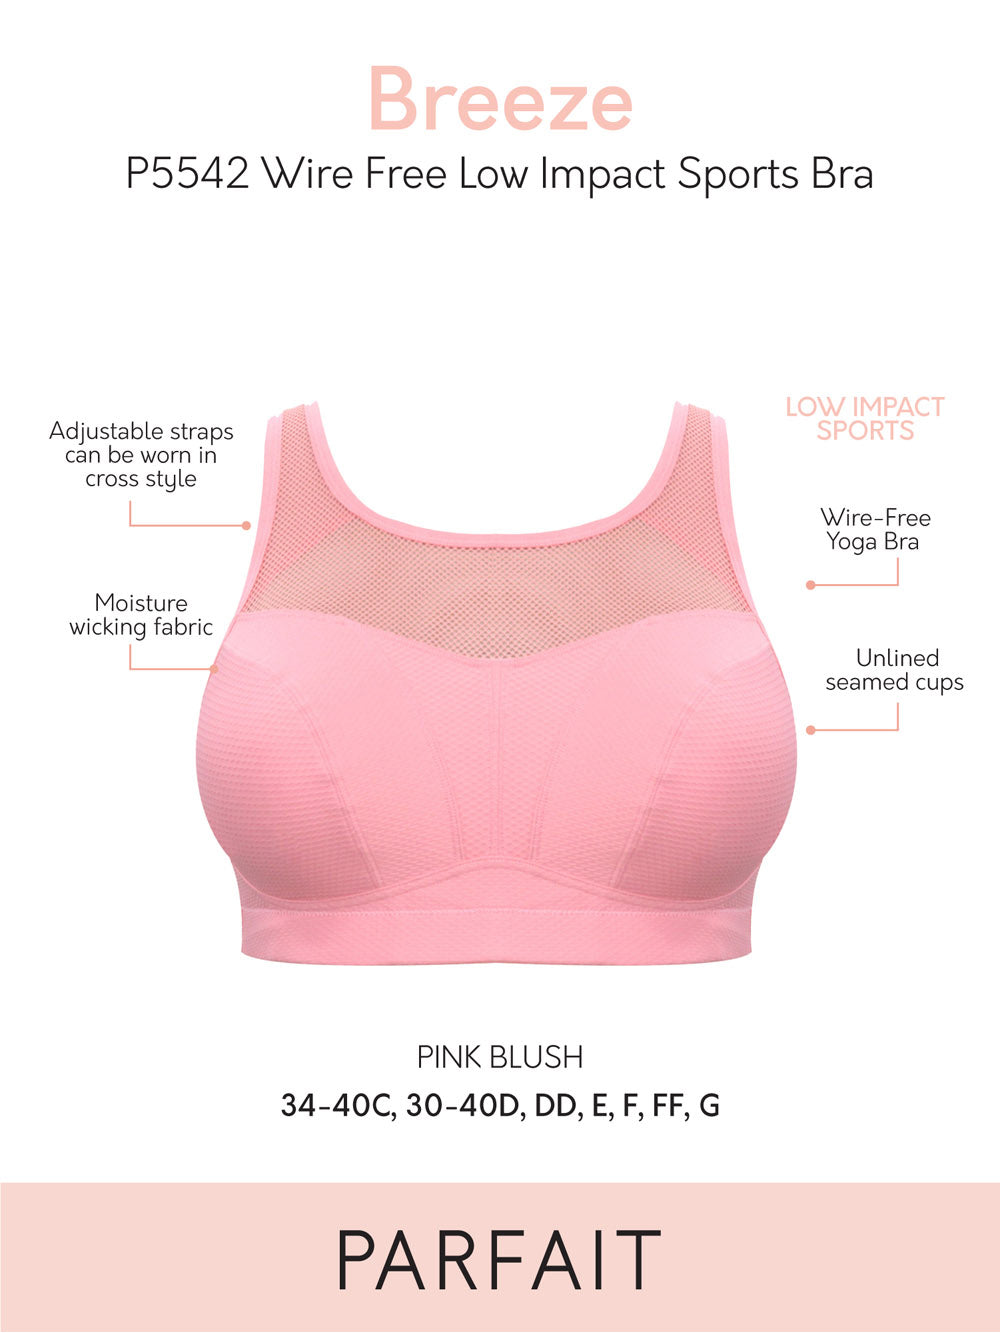 Parfait Bras Parfait Breeze Wire Free Low Impact Sports Bra - Pink Blush